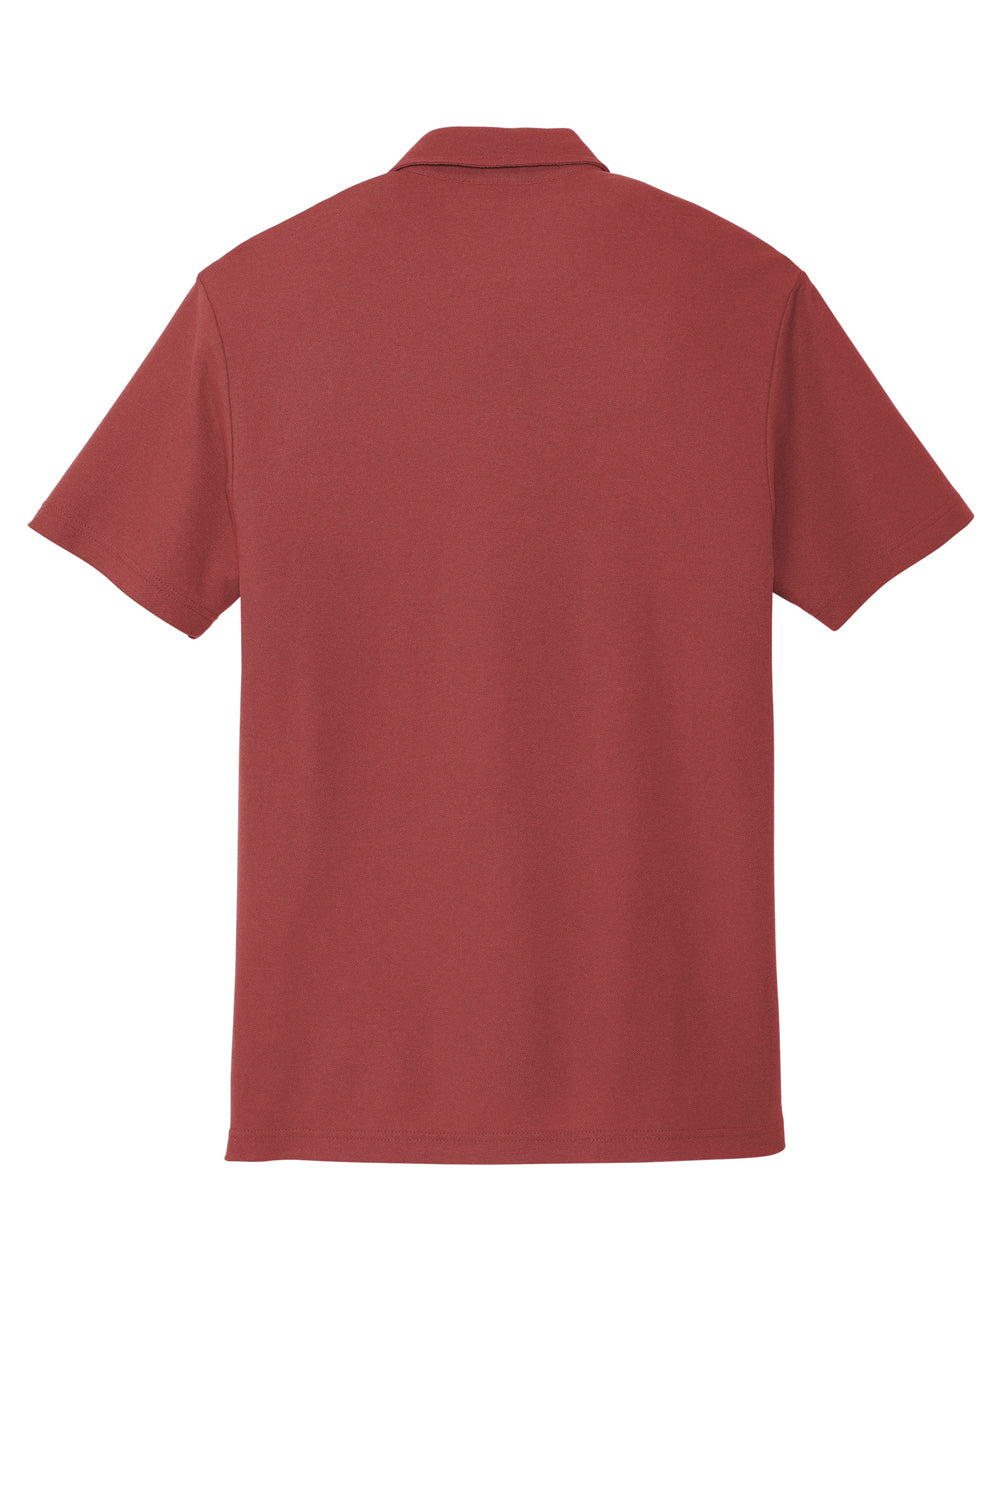 Port Authority K868 Mens C-FREE Pique Short Sleeve Polo Shirt w/ Pocket Garnet Red Flat Back